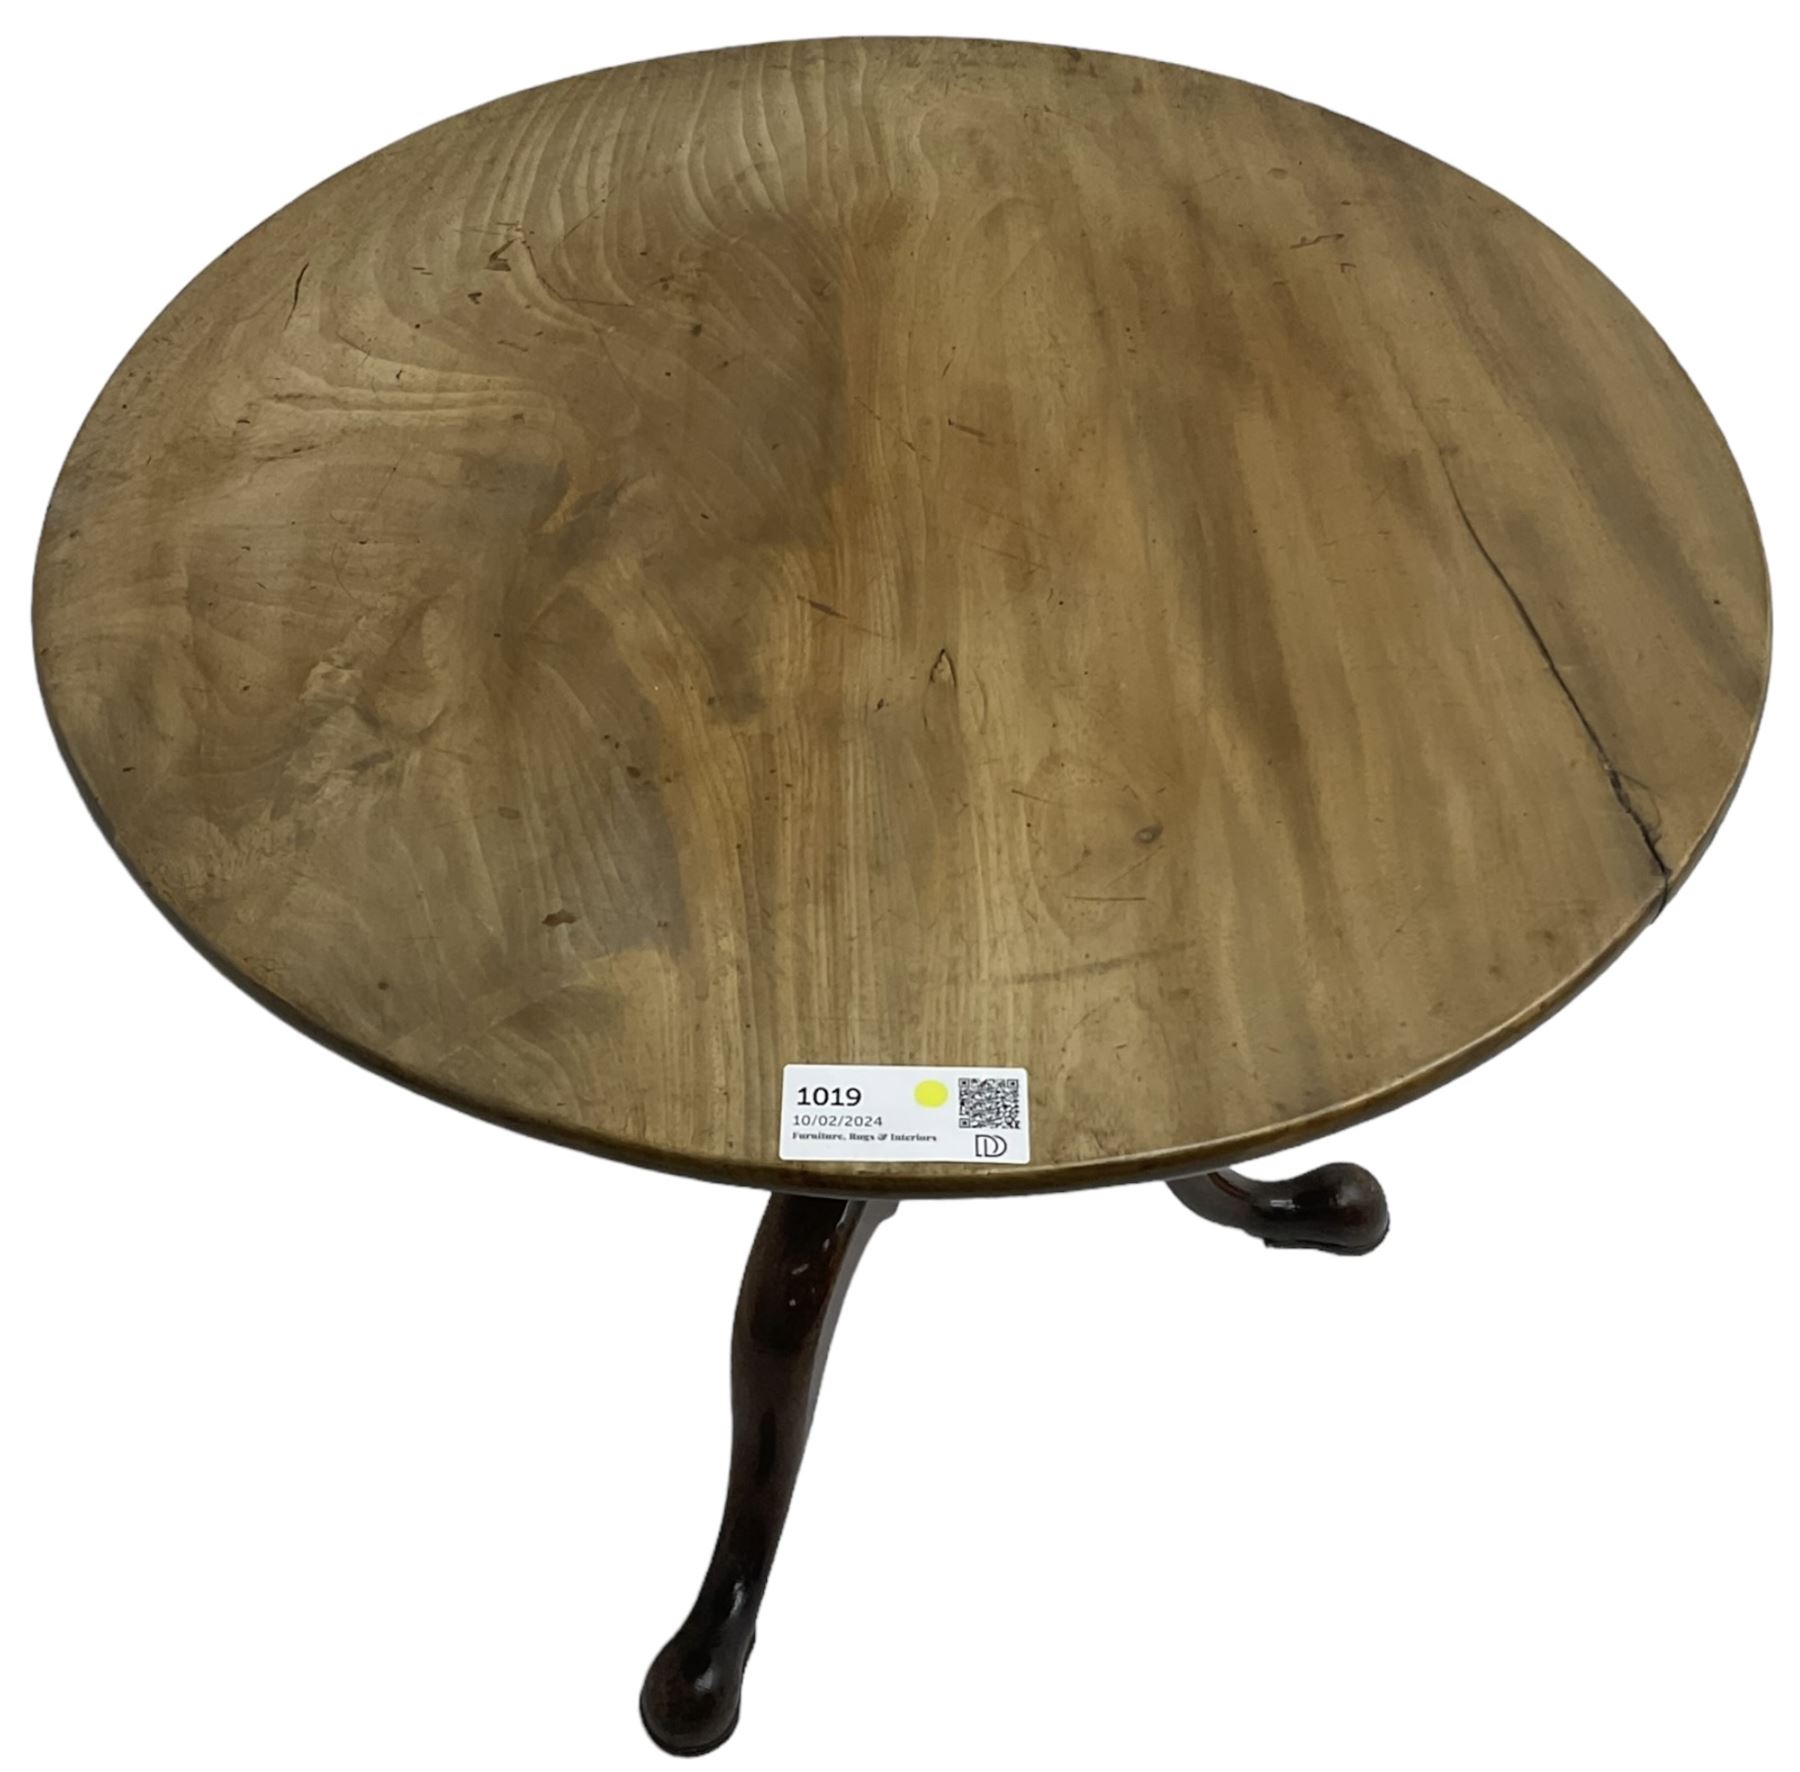 19th century mahogany pedestal table - Image 4 of 6